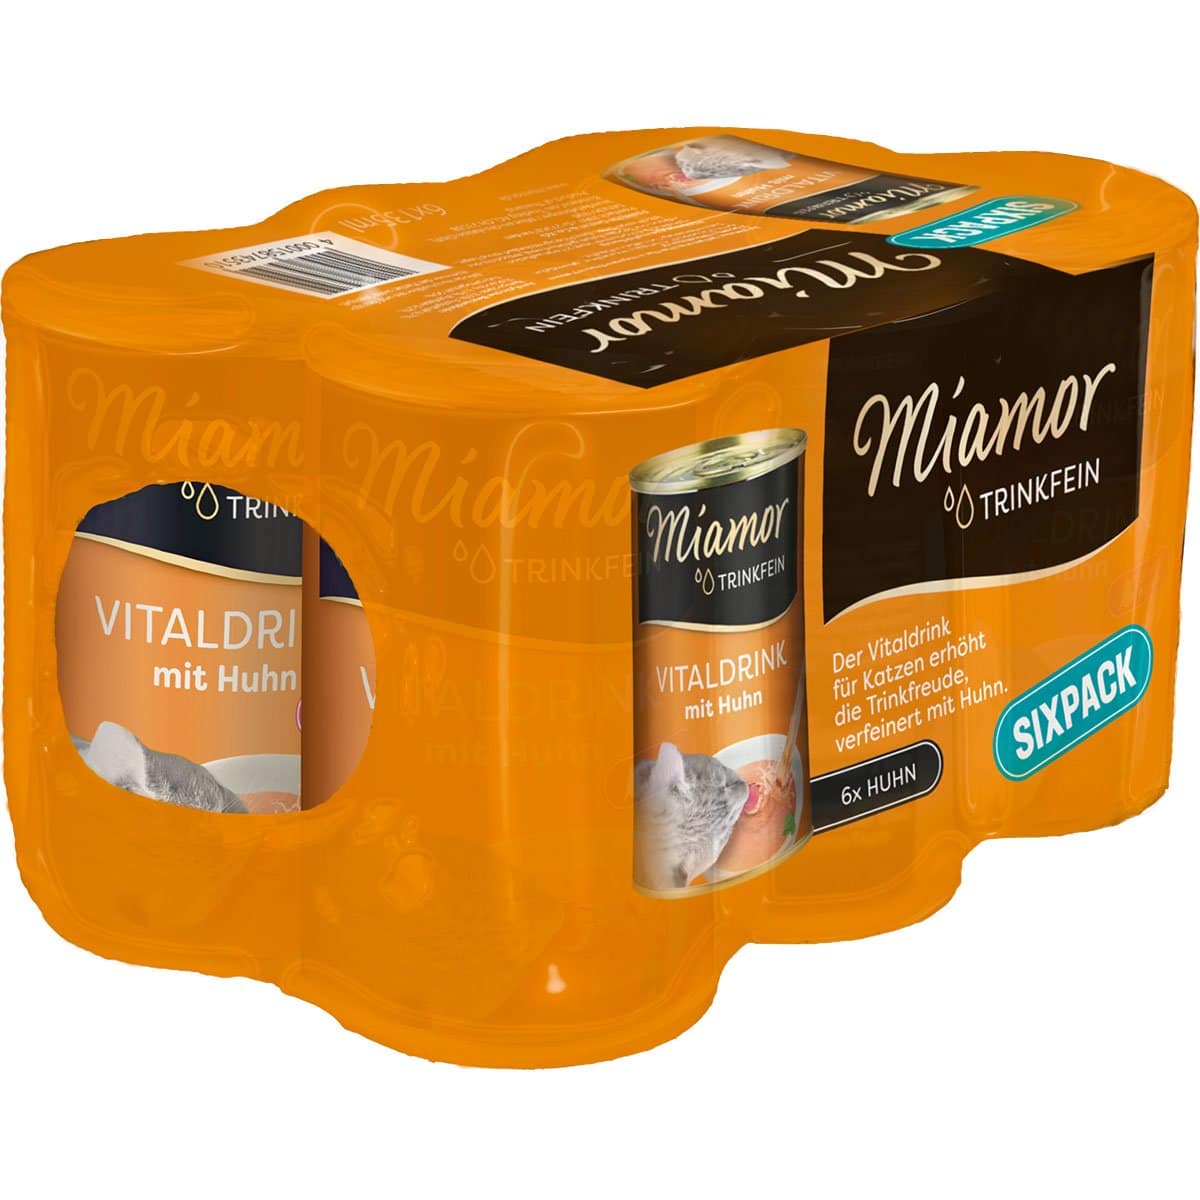 Miamor Trinkfein - Vitaldrink mit Huhn Sixpack 6x135ml